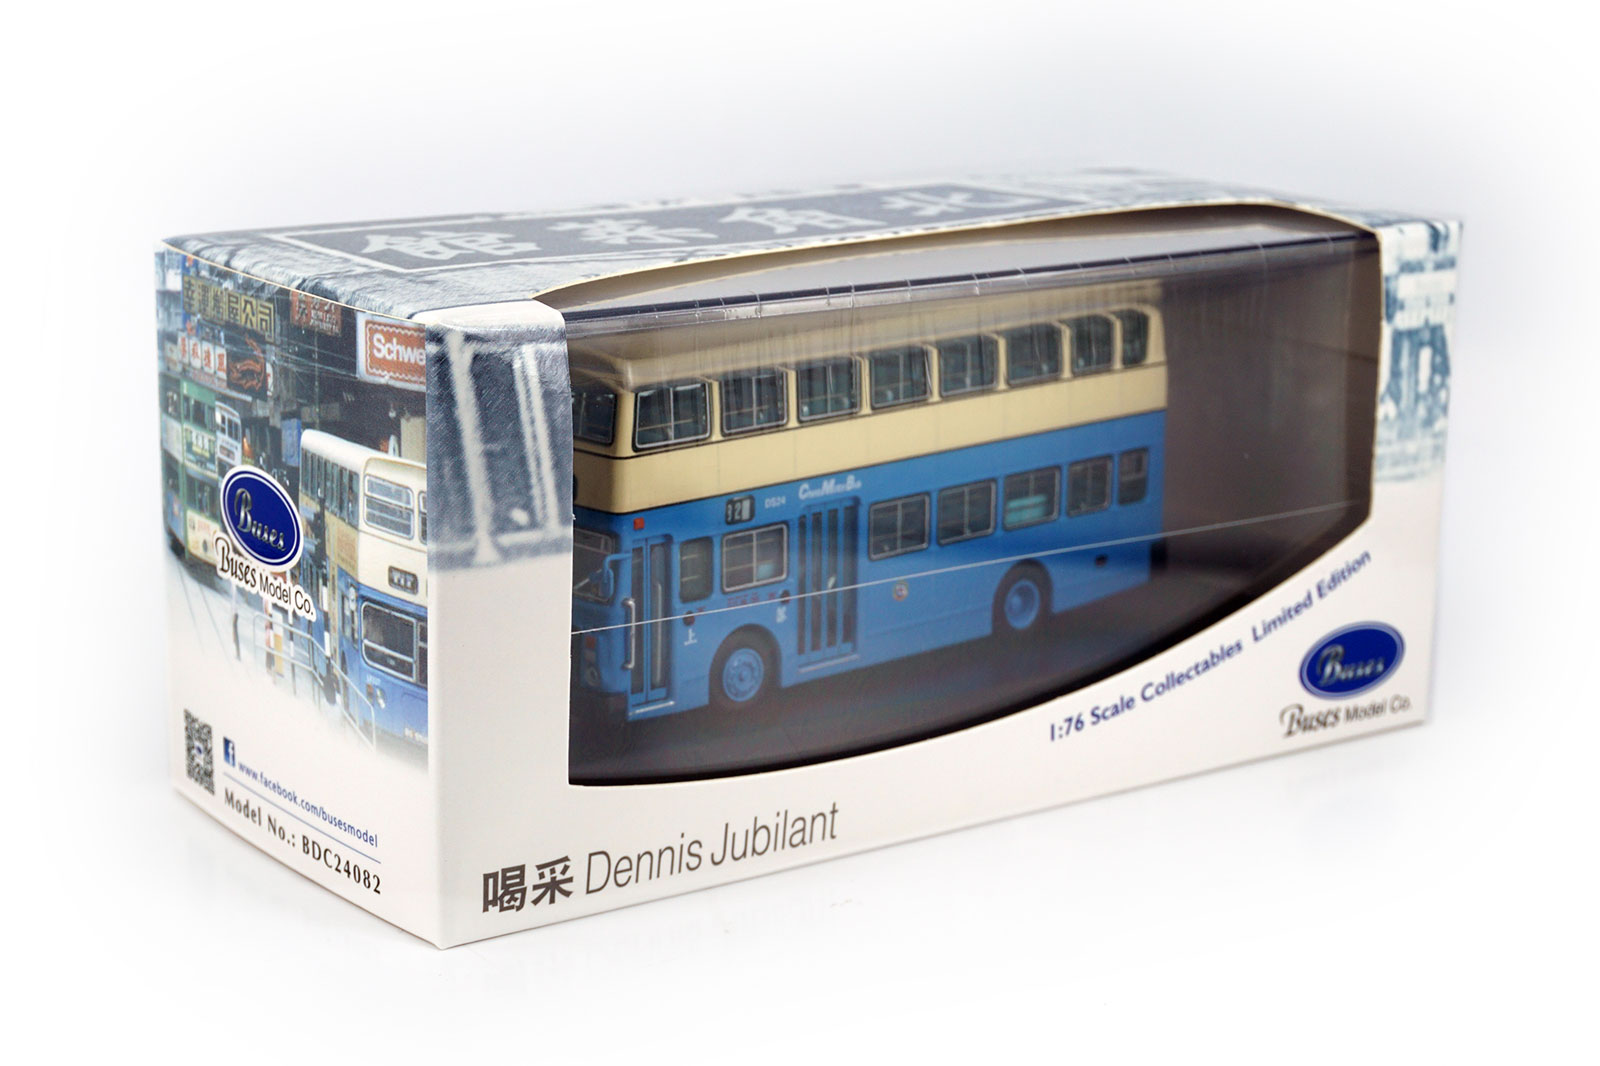 BDC24082 - Dennis Jubilant/Alexander - China Motor Bus produced by ...